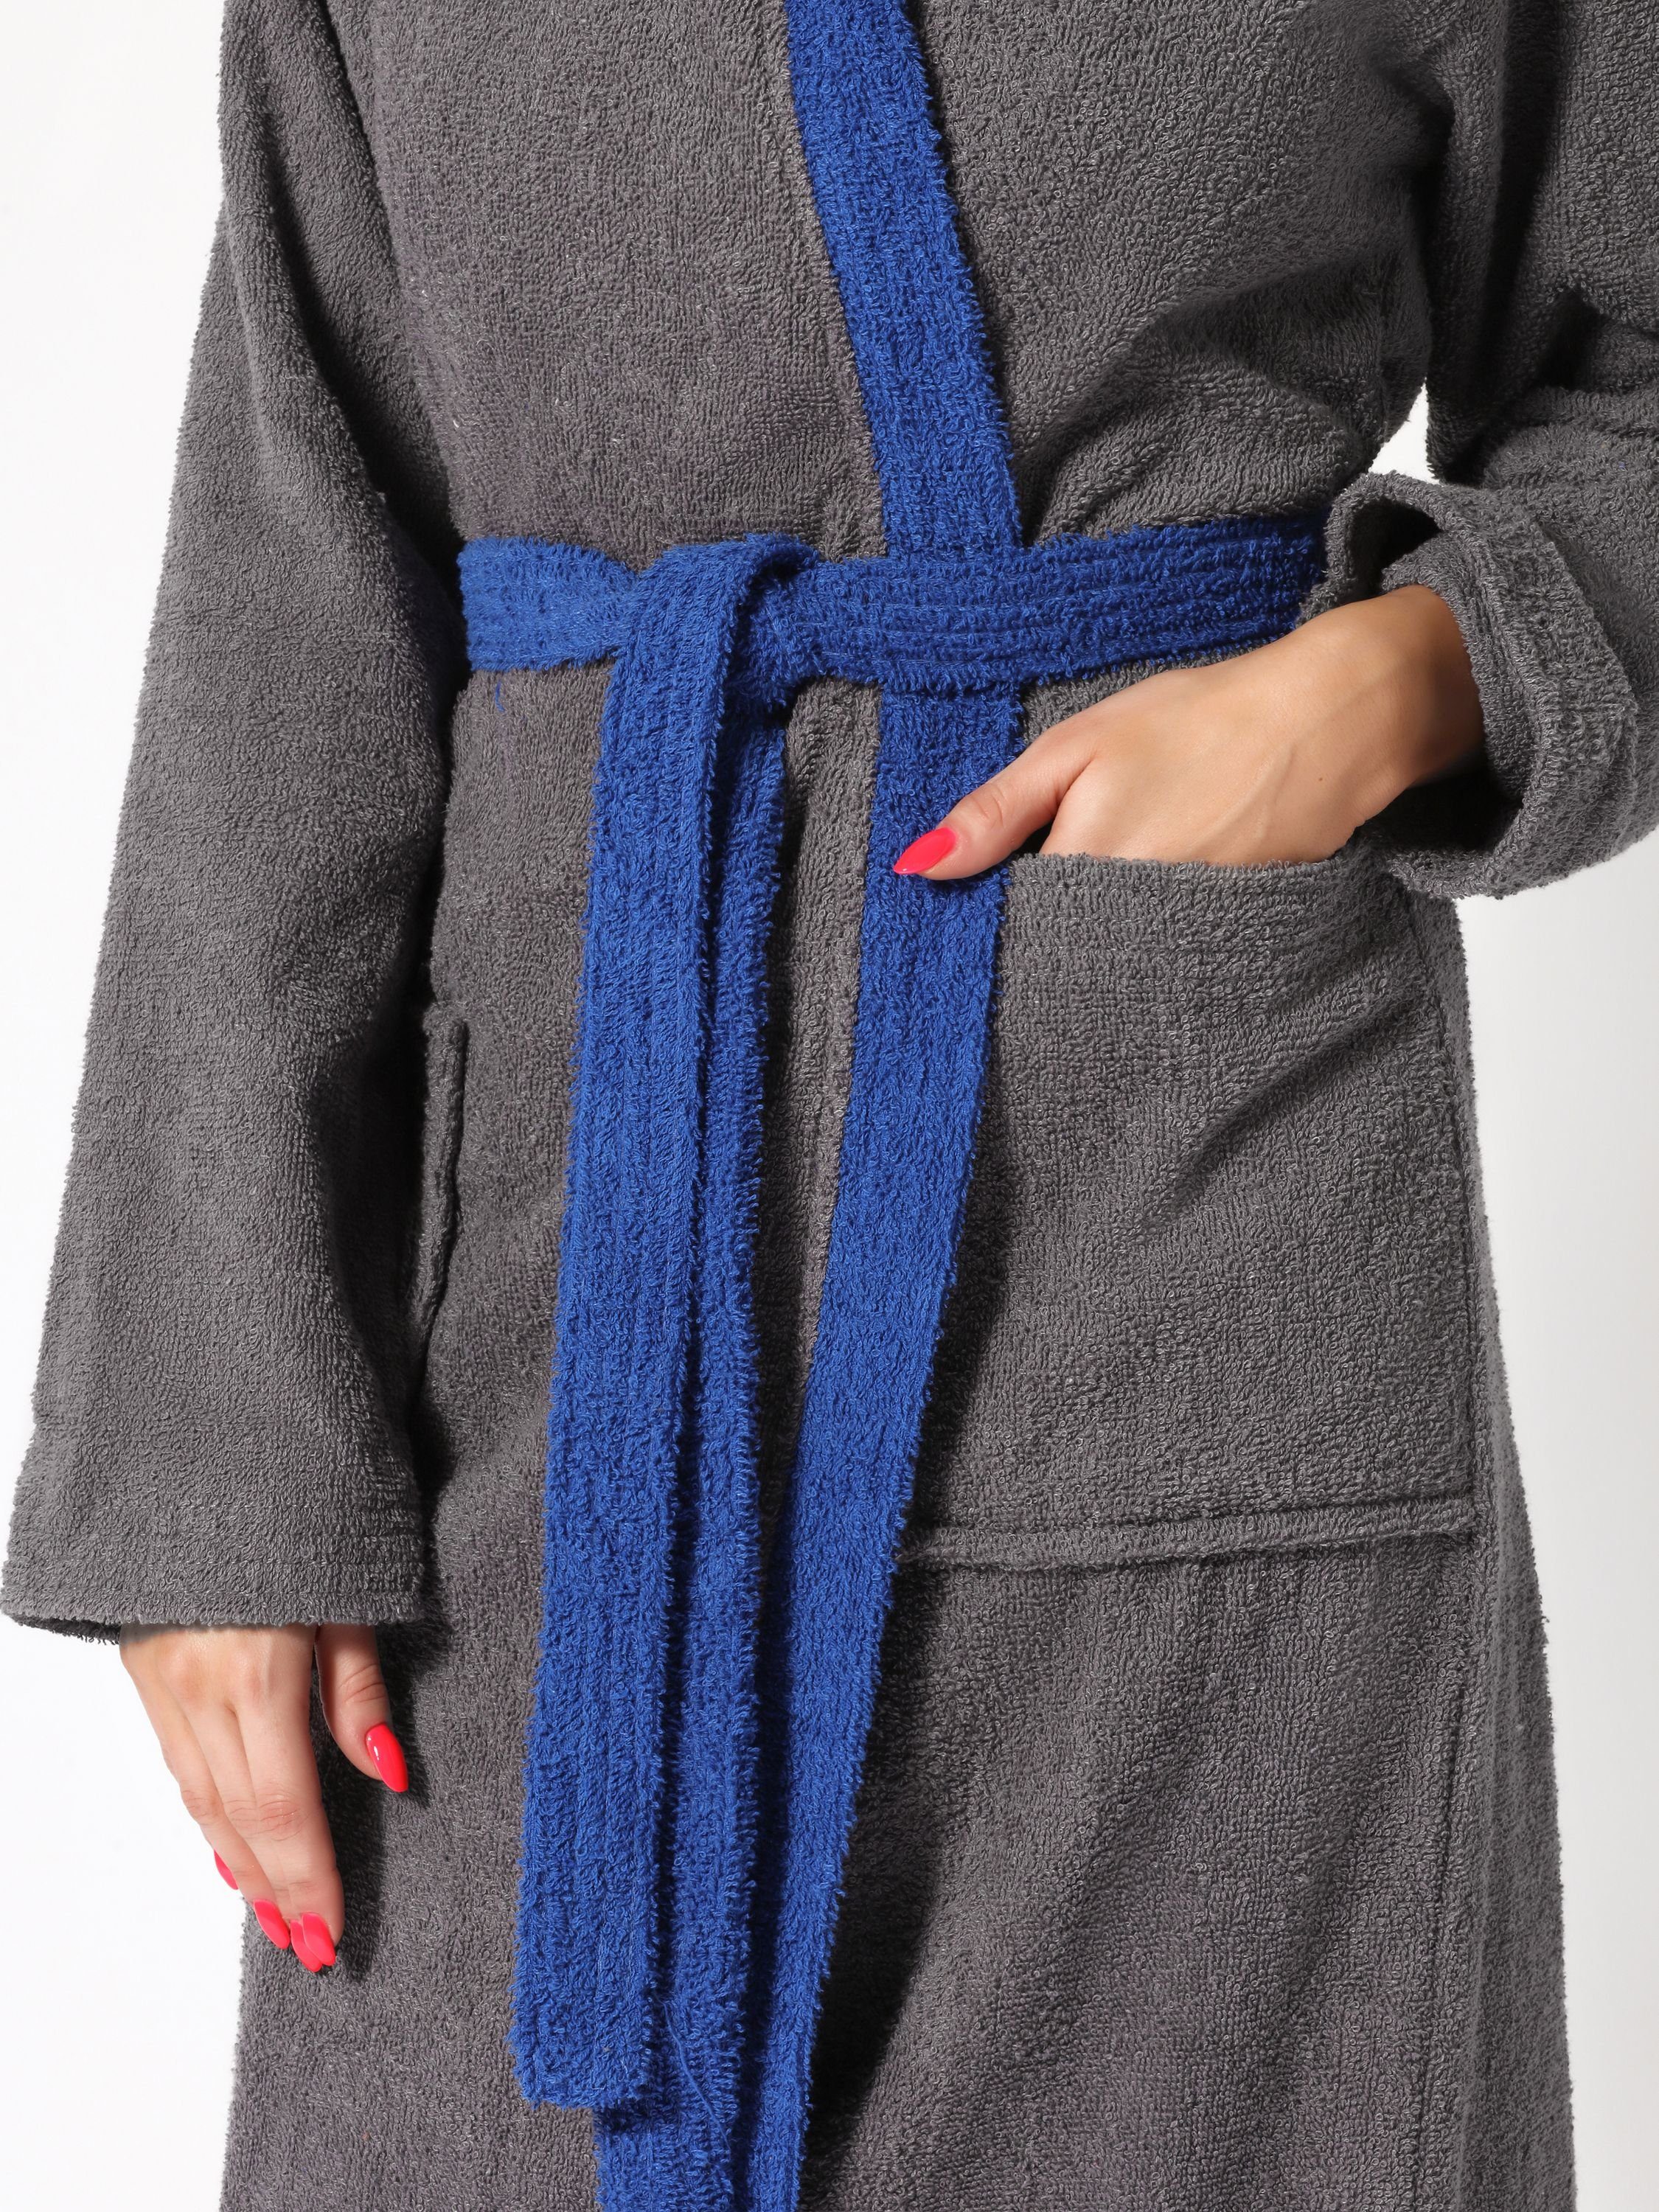 Damen Bademantel Baumwolle, aus Frottee Ladeheid Langform, LA40-191, 100% Baumwolle Kapuze Bademantel Dunkelgrau-12/Blau-28